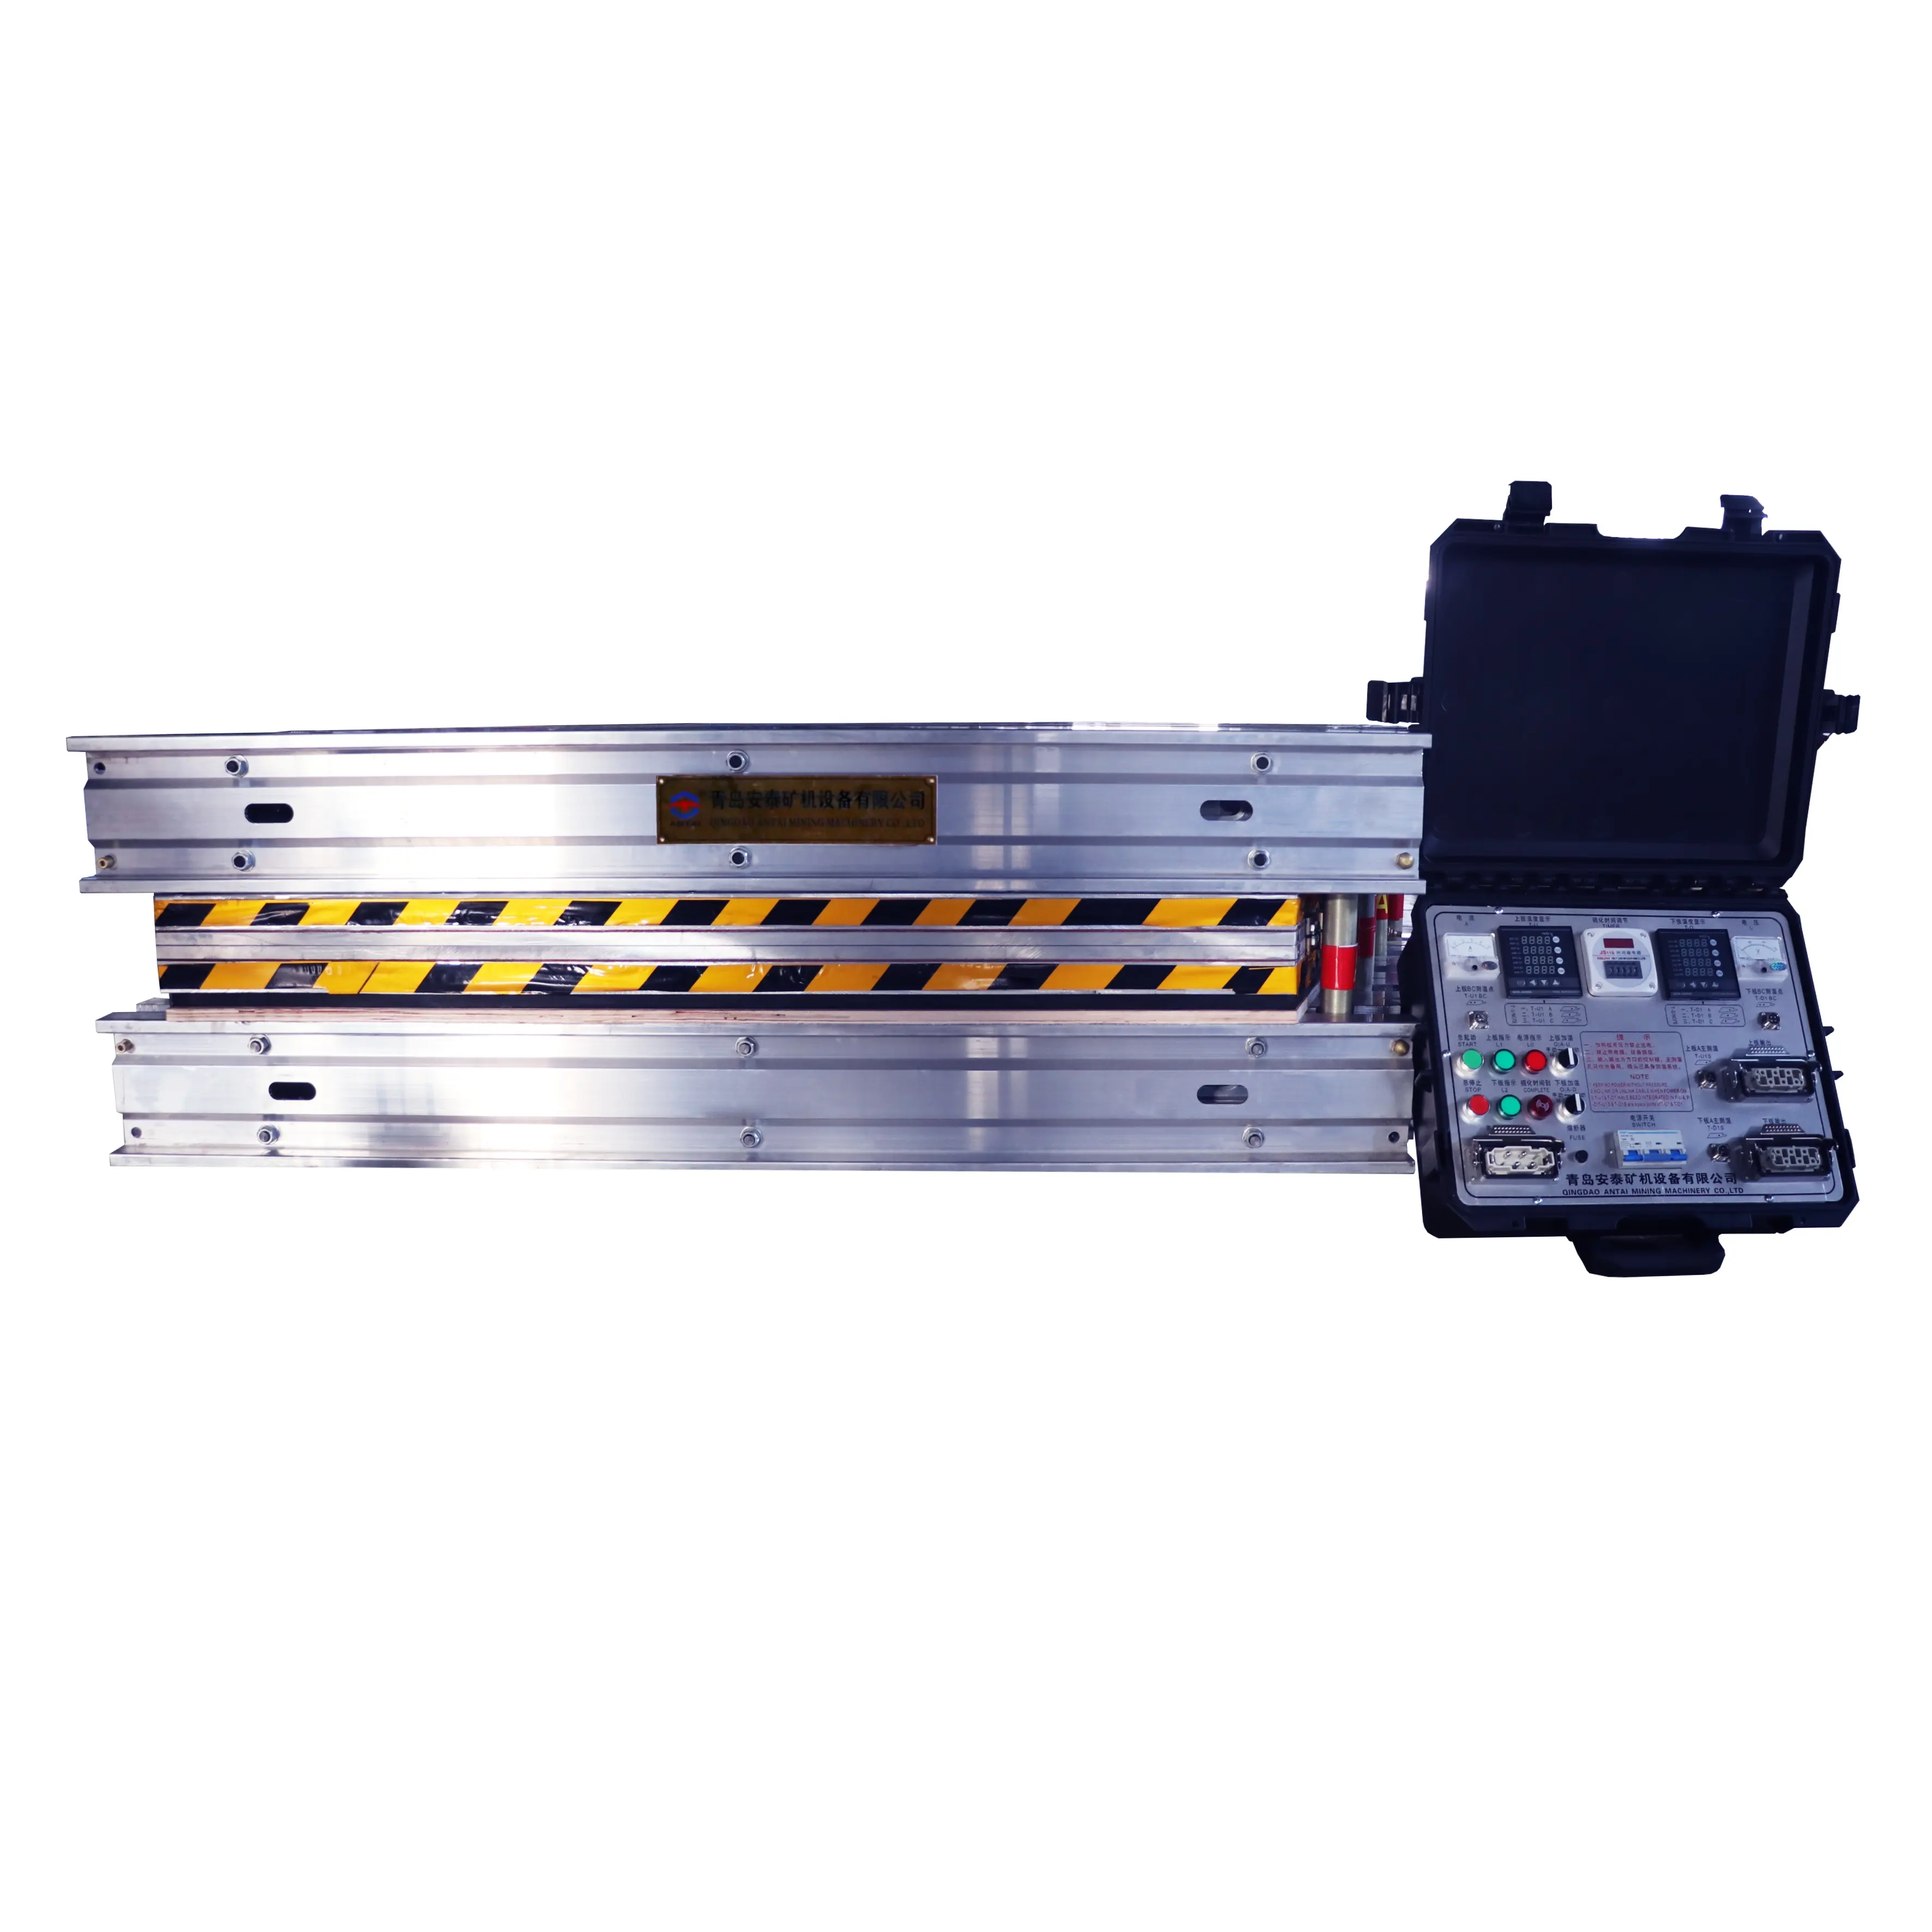 almex type antai SVP conveyor belt hot jointing splicing vulcanizing press